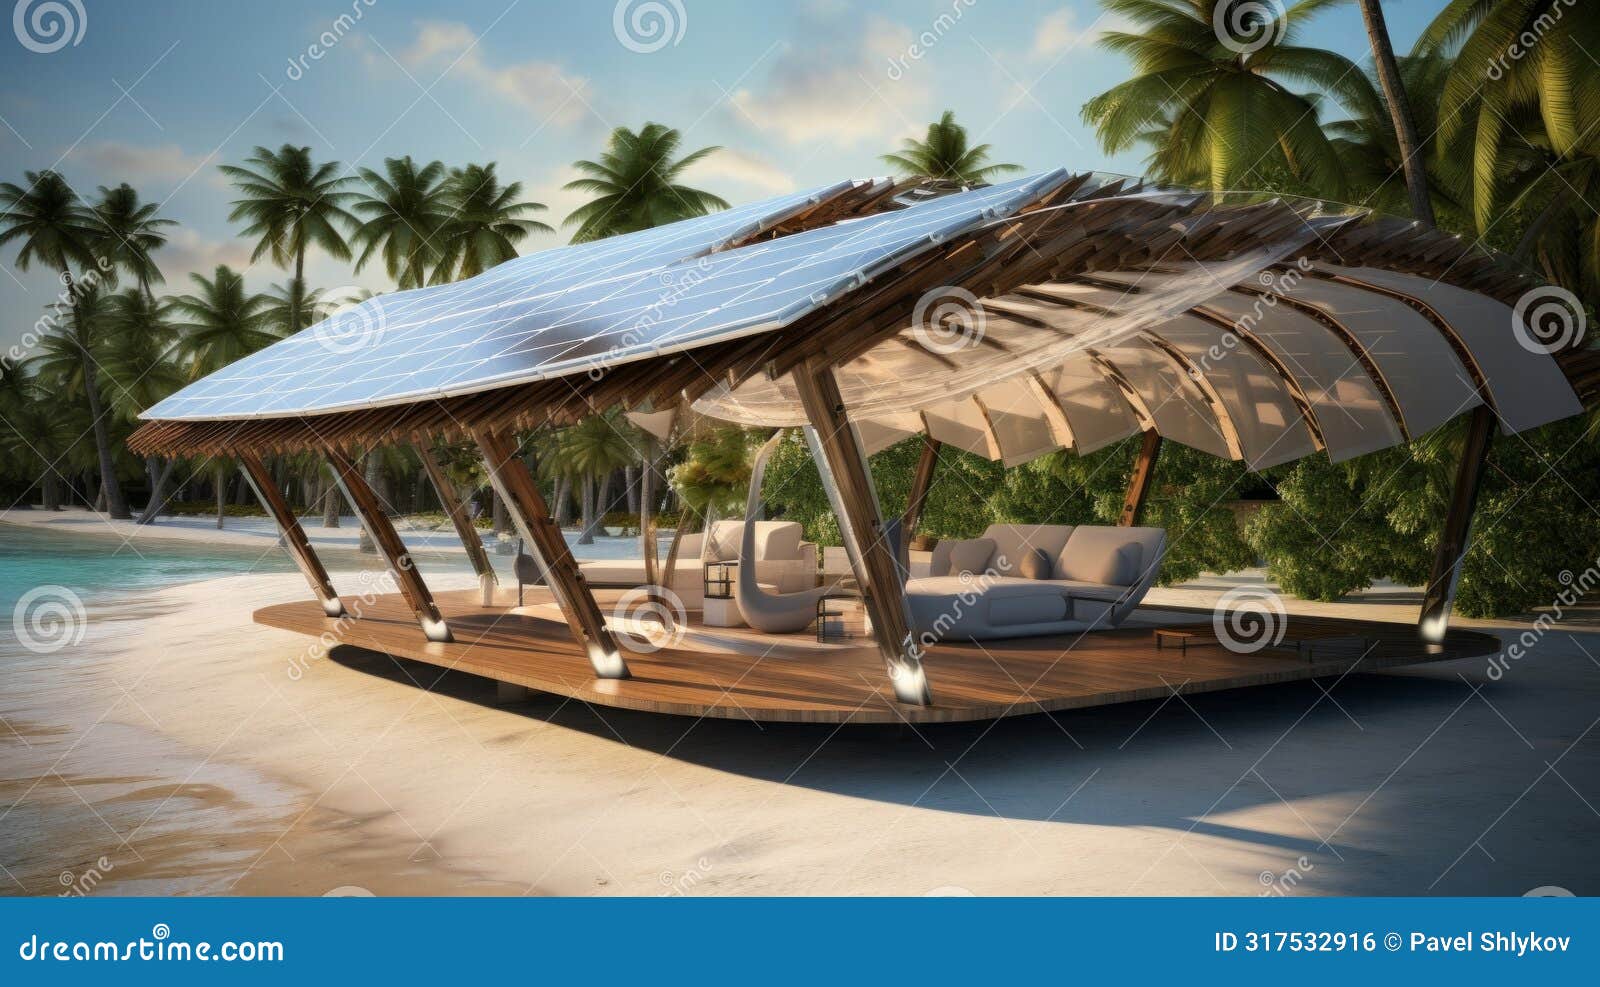 resort sunroof made from solar panels.